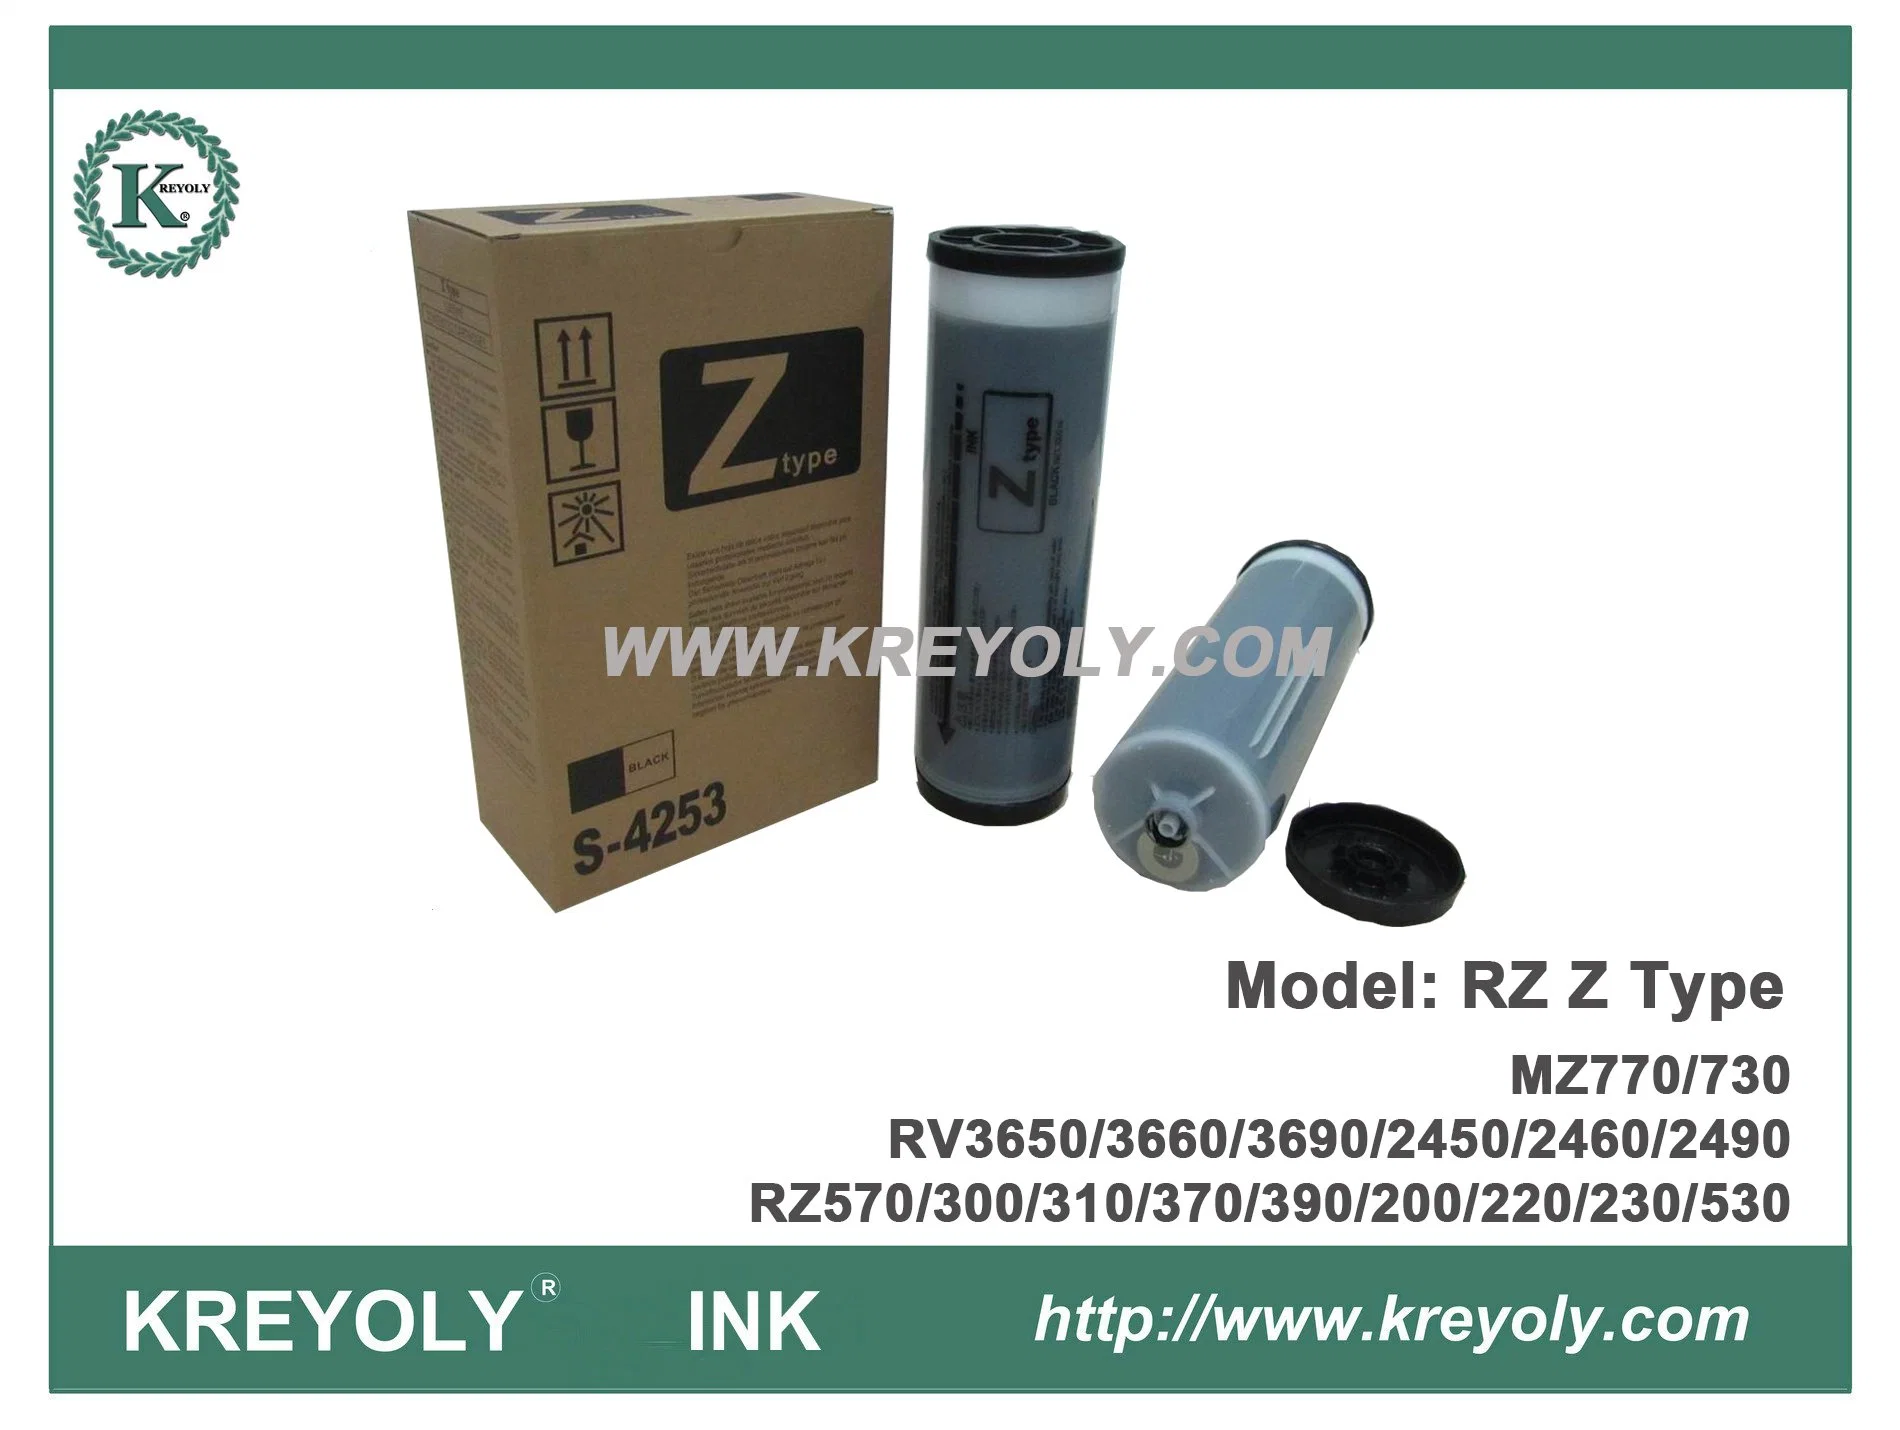 Digital duplicator ink, compatible RZ ink, Z type ink